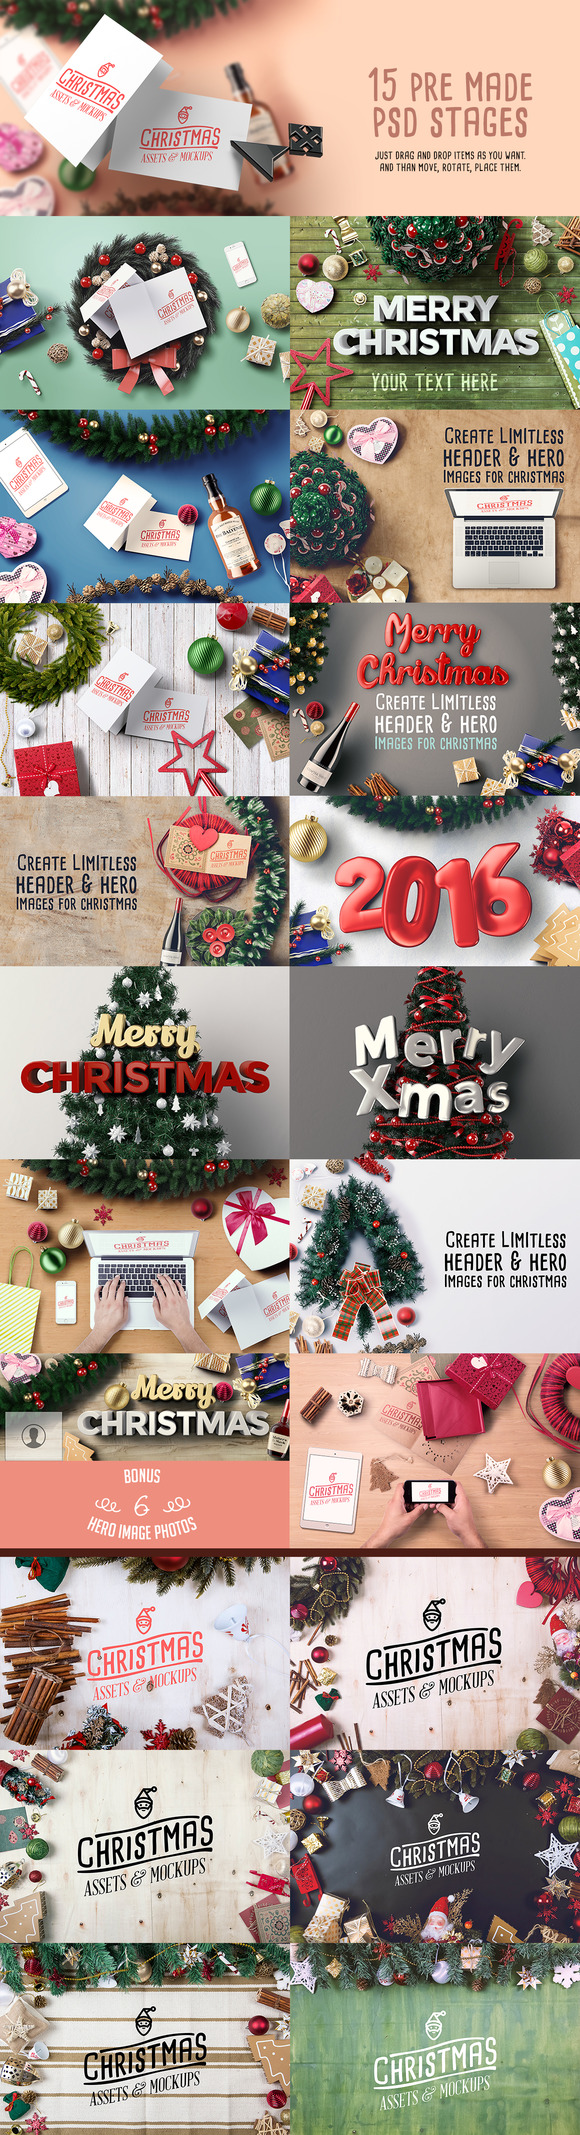 CreativeMarket: Christmas Assets & Mock Ups -For2016